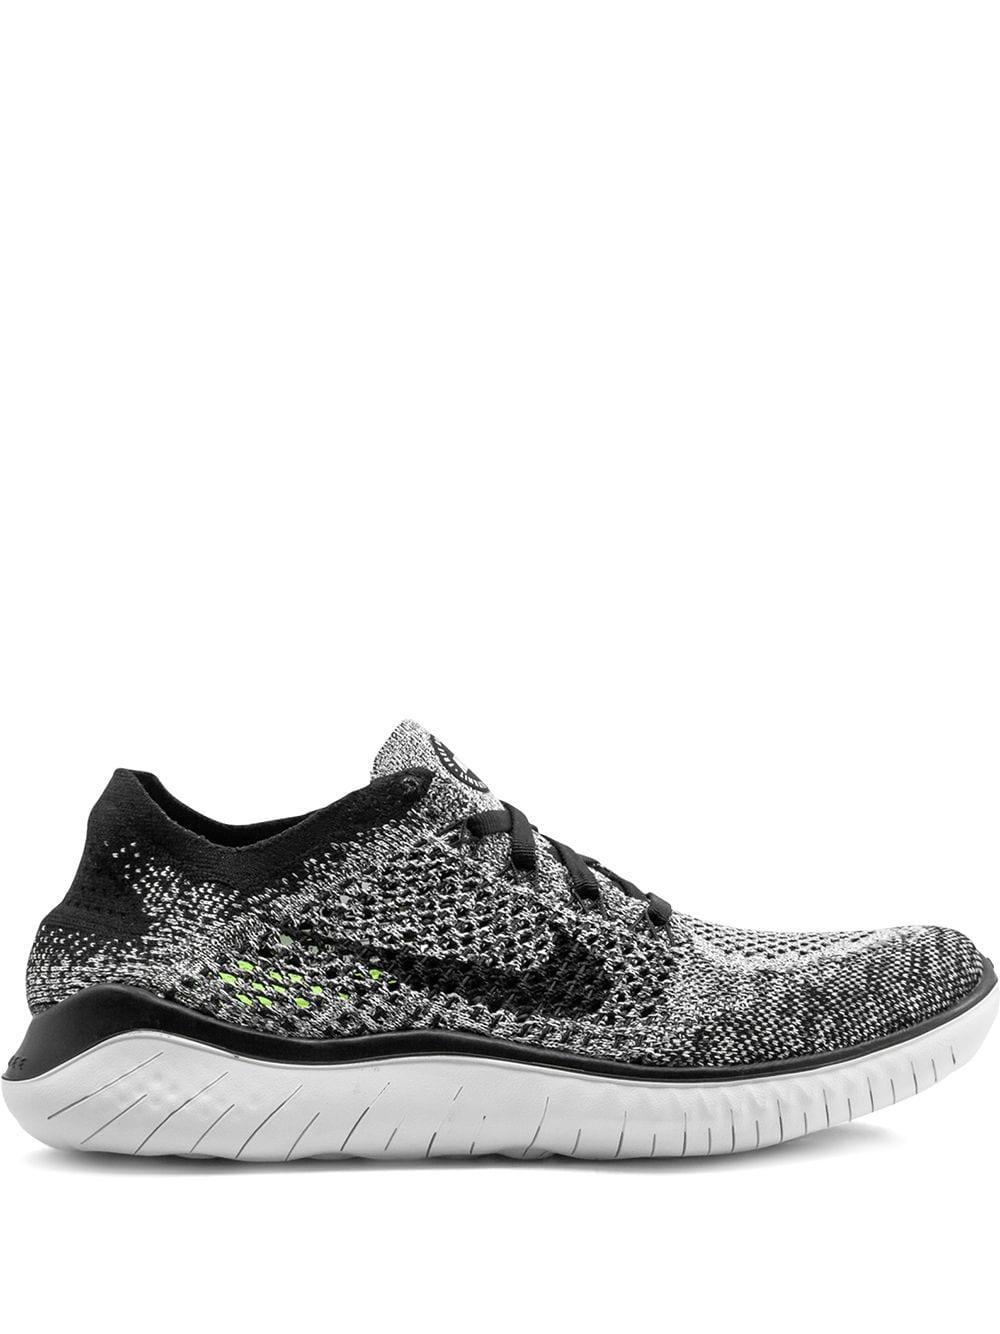 Nike Free Rn Flyknit 2018 Running Shoes in Black | Lyst